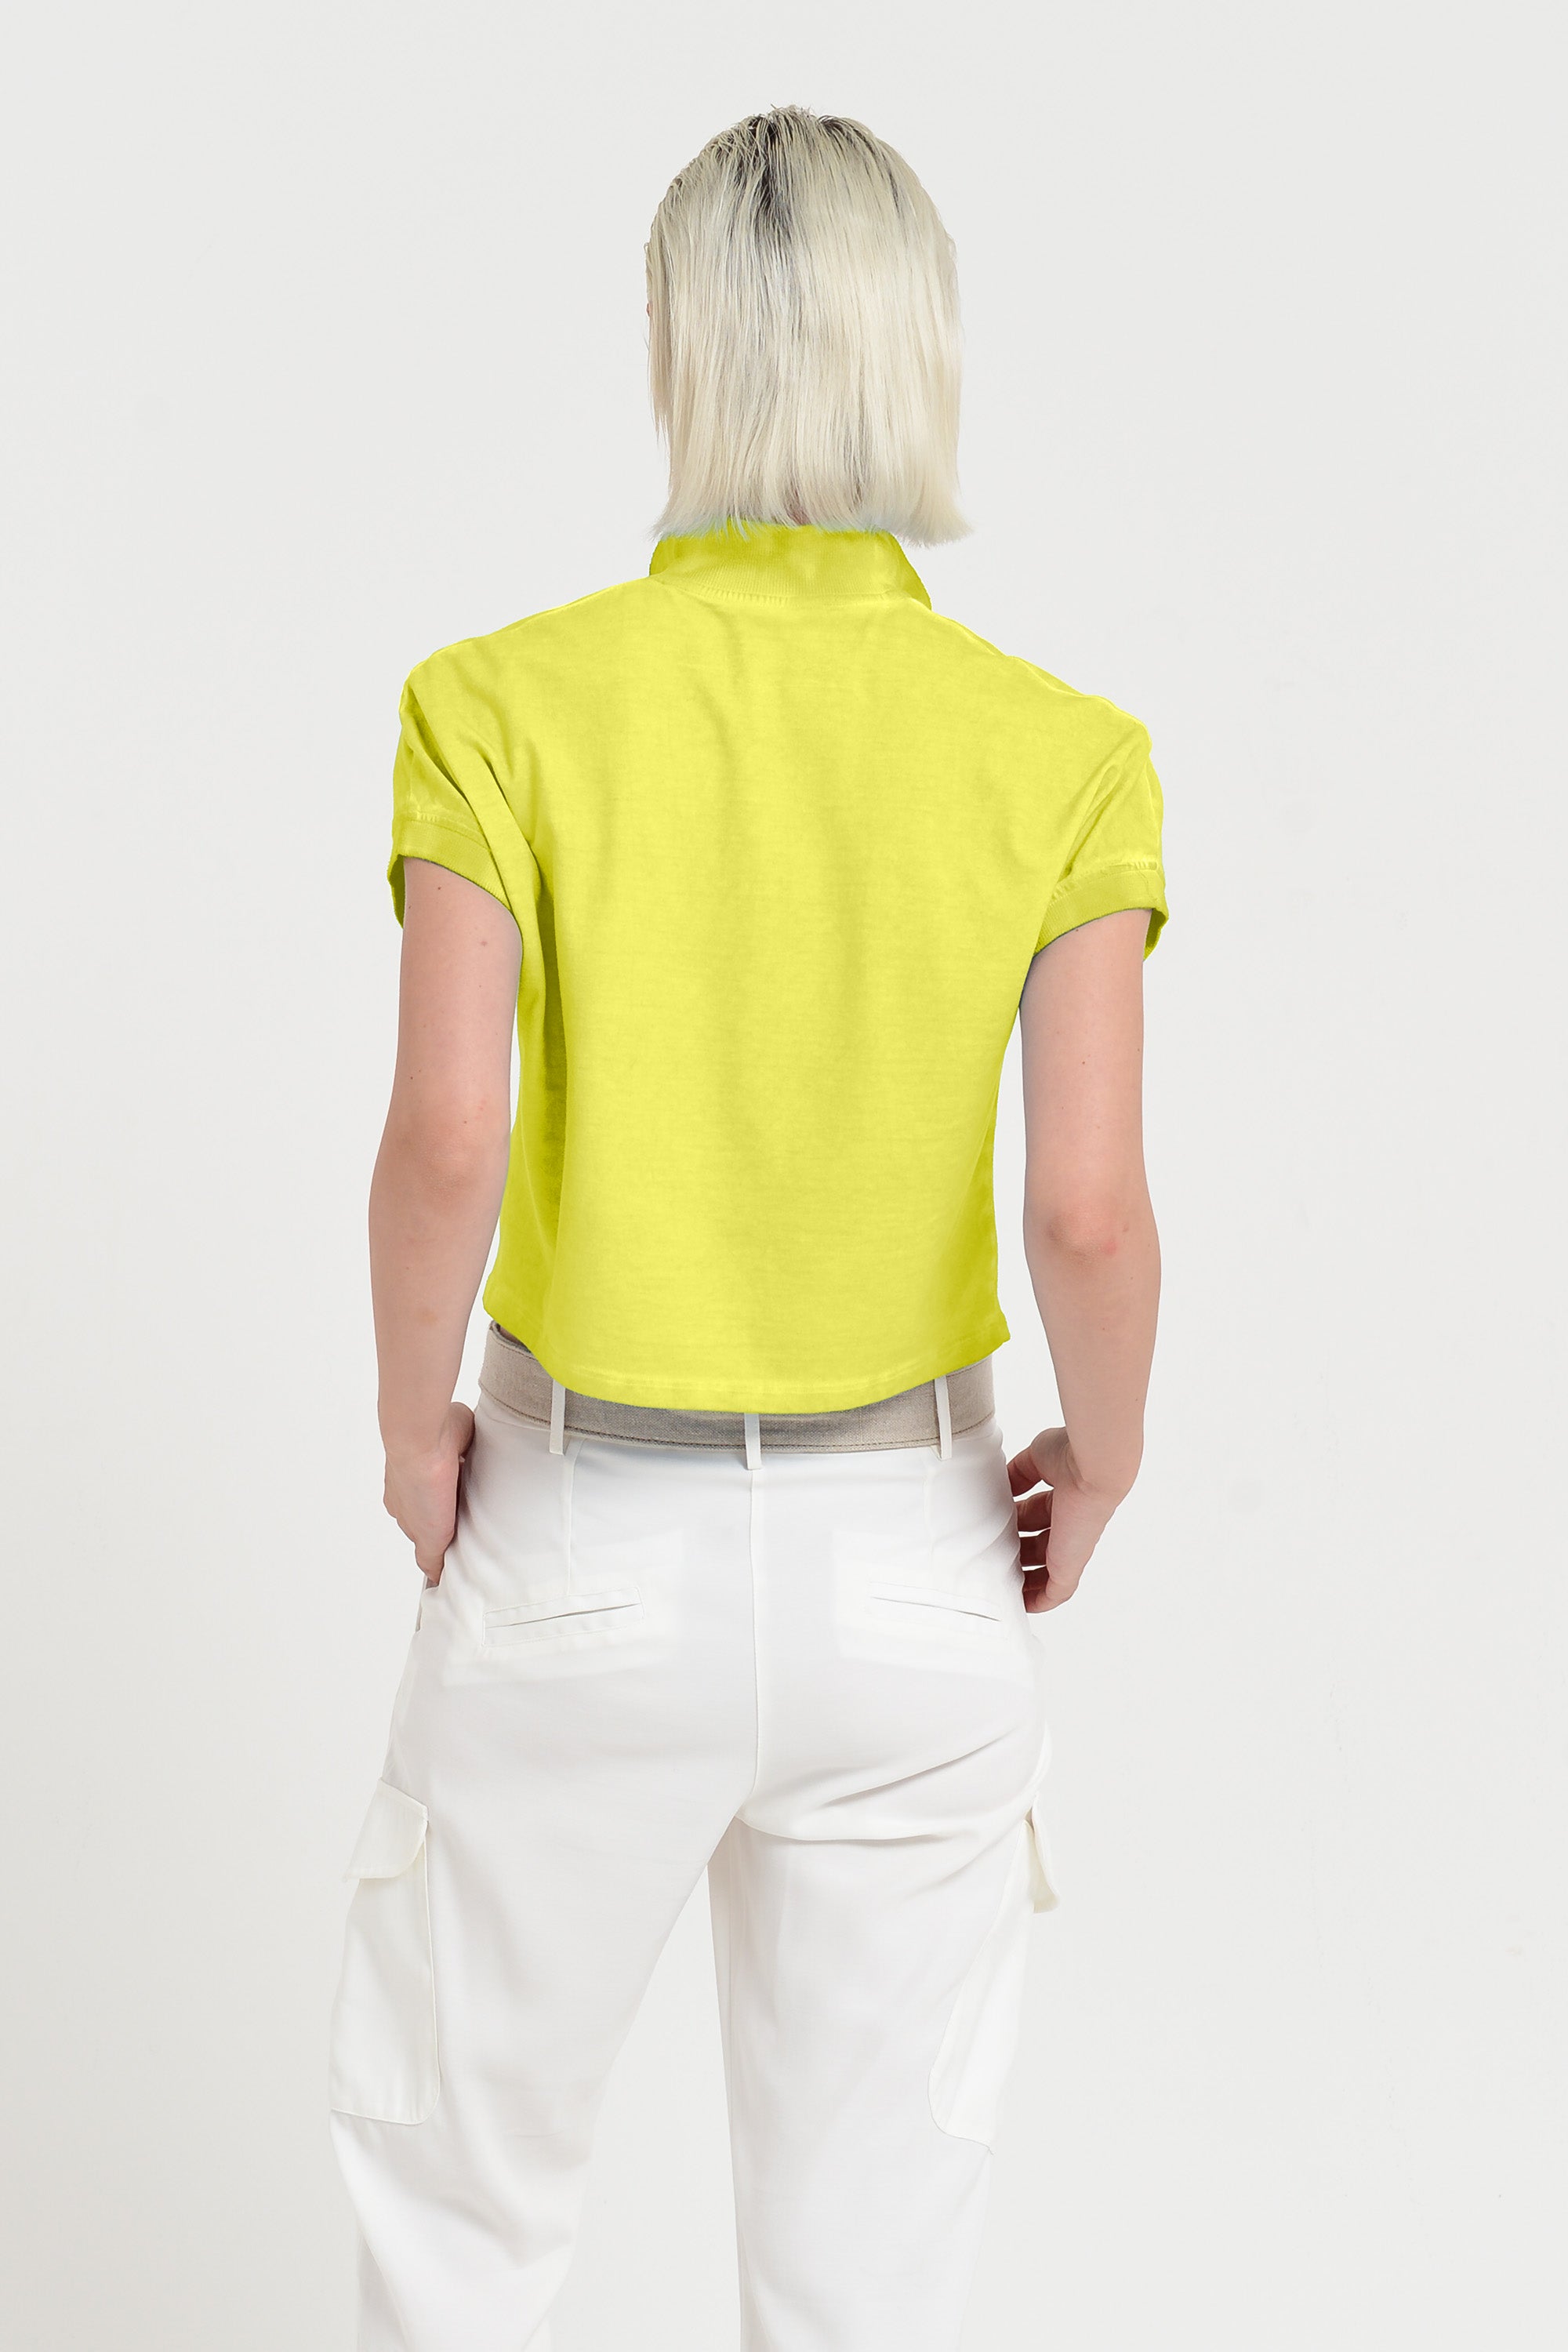 Crop Polo - Women's Cropped Polo Shirt - Lime